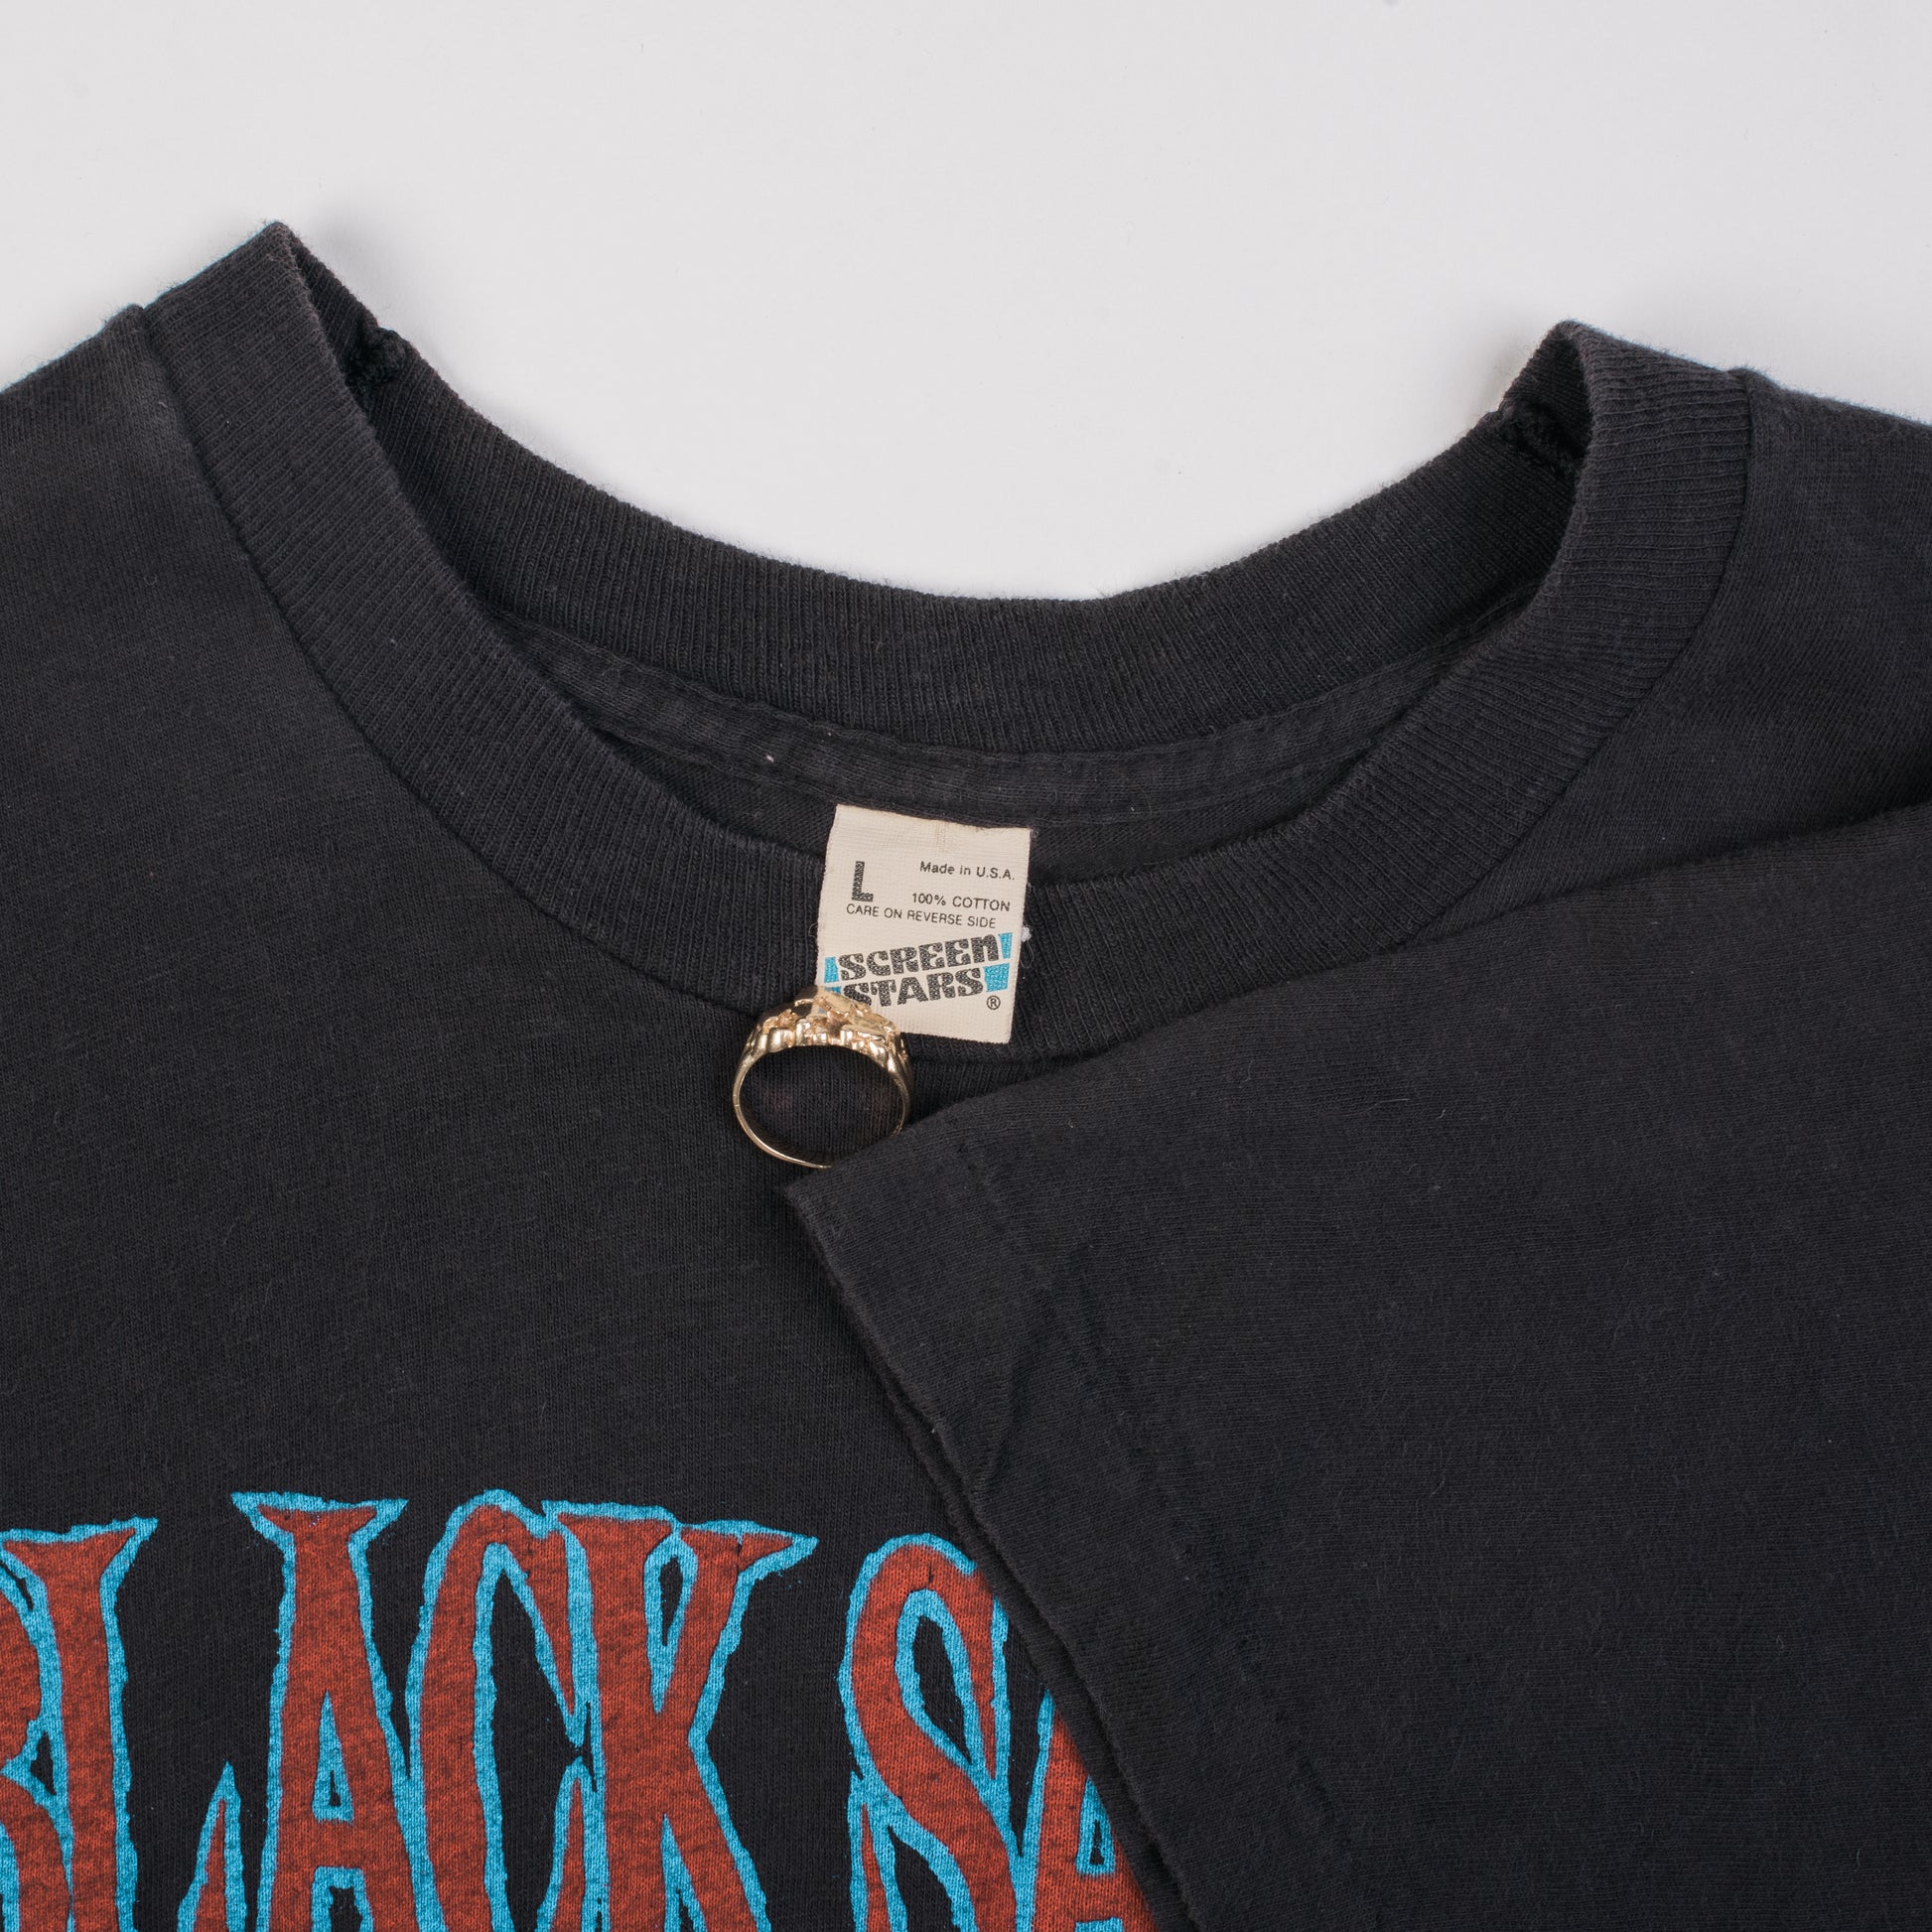 Vintage 1986 Black Sabbath Tour T-Shirt – Mills Vintage USA